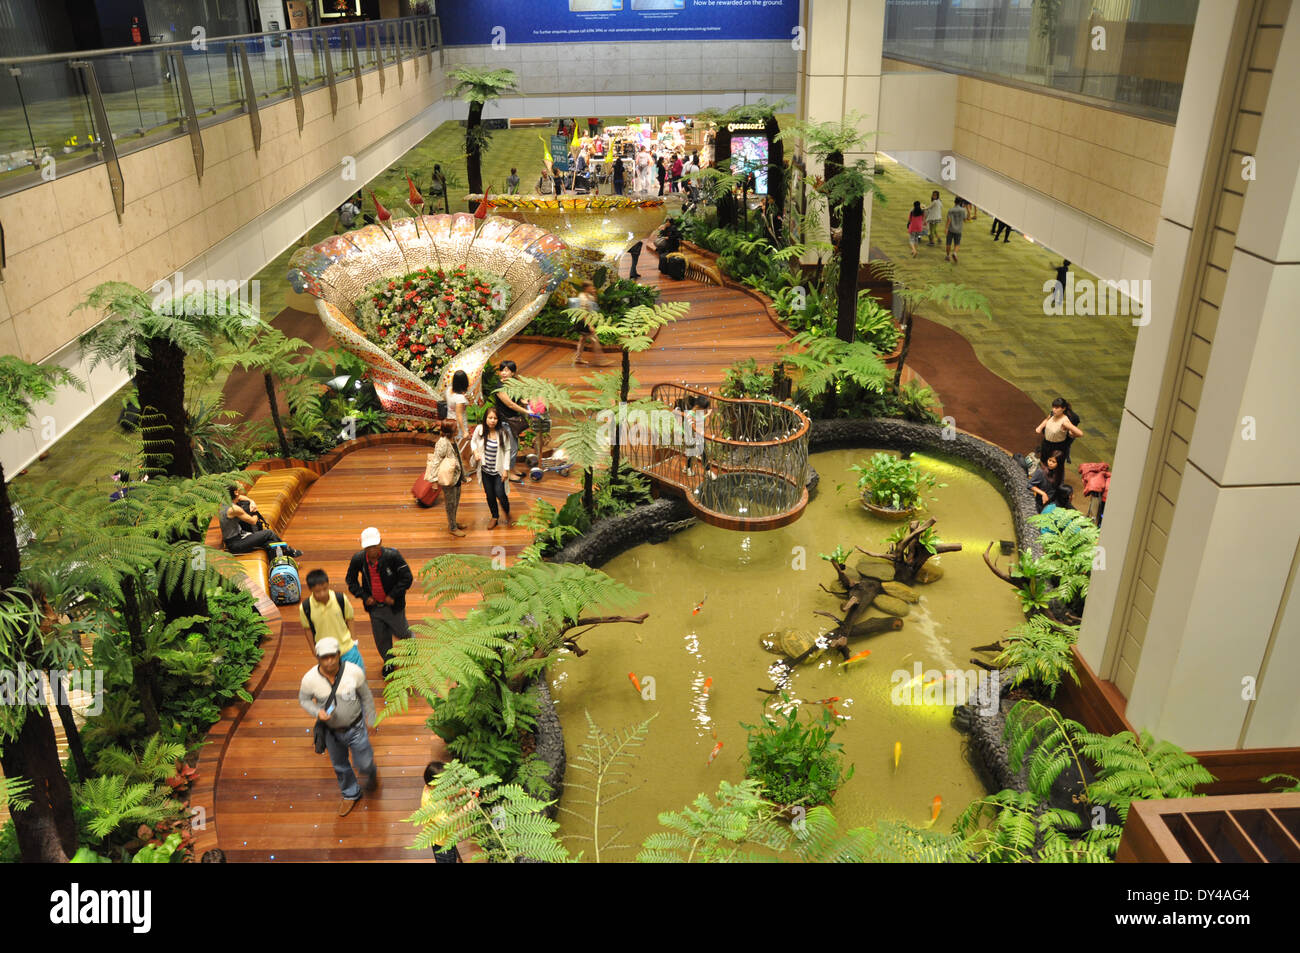 Terminal 2  Singapore Changi Airport